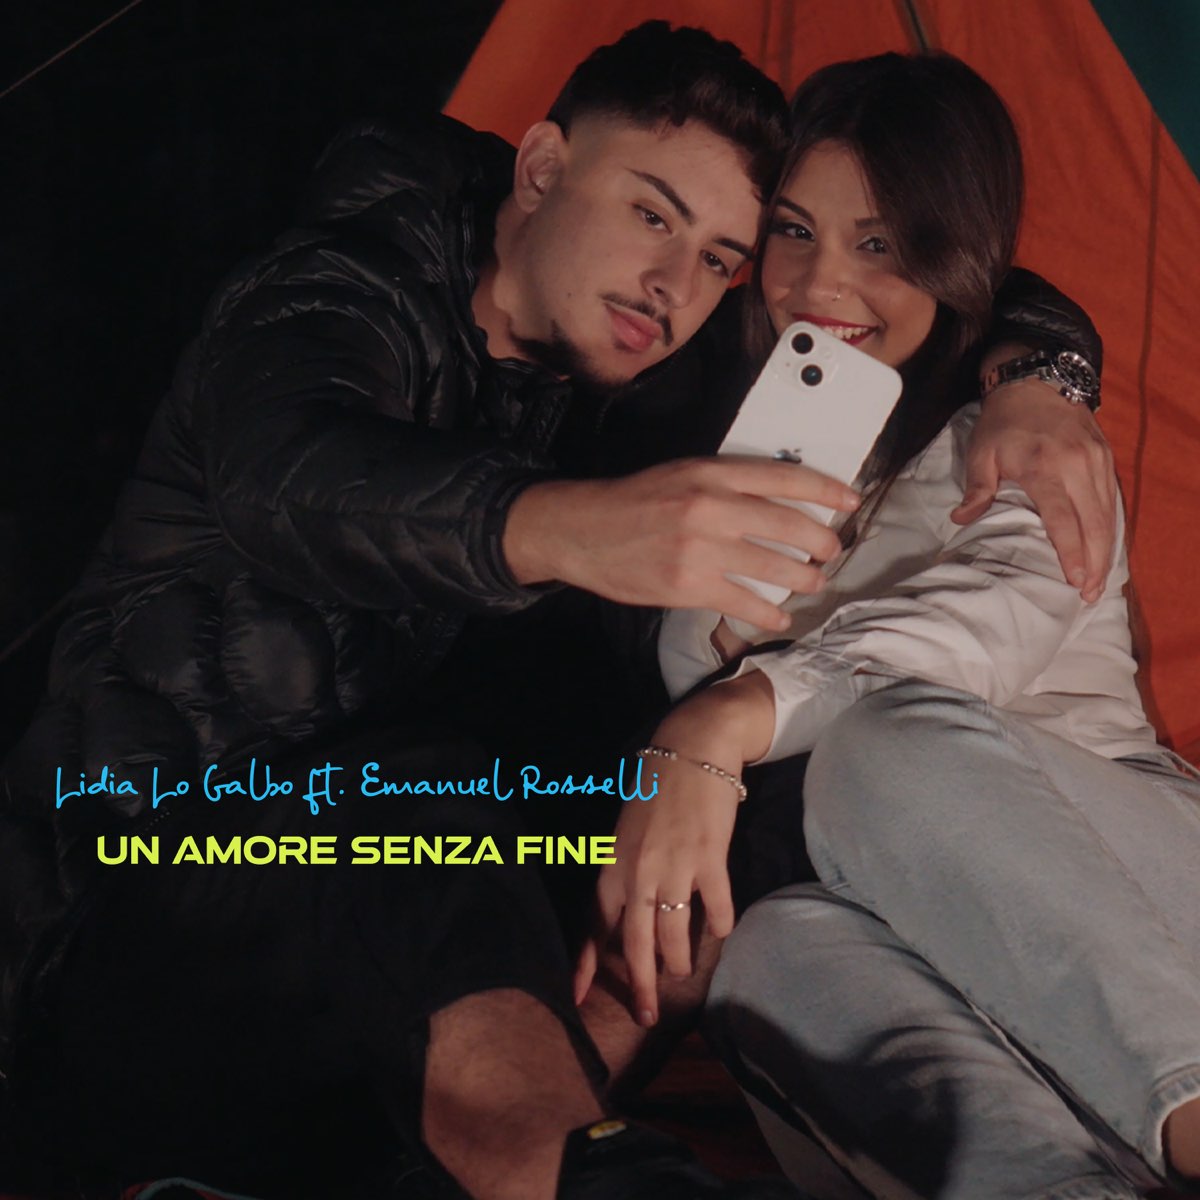 Un amore senza fine (feat. Emanuel Rosselli) - Single - Album by Lidia Lo  Galbo - Apple Music